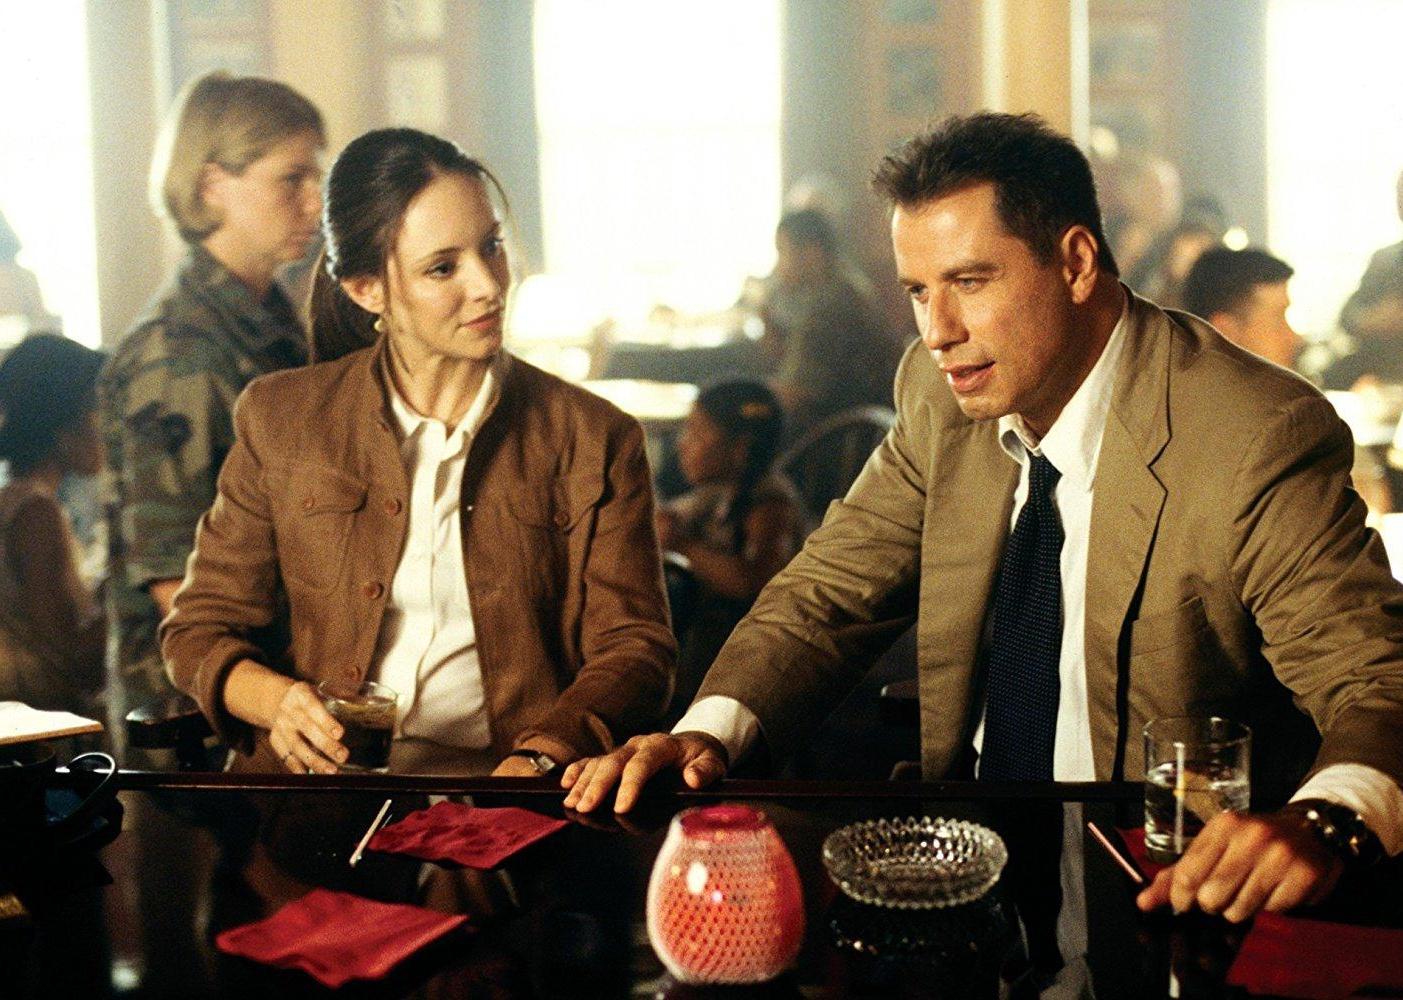 John Travolta and Madeline Stowe at a bar.